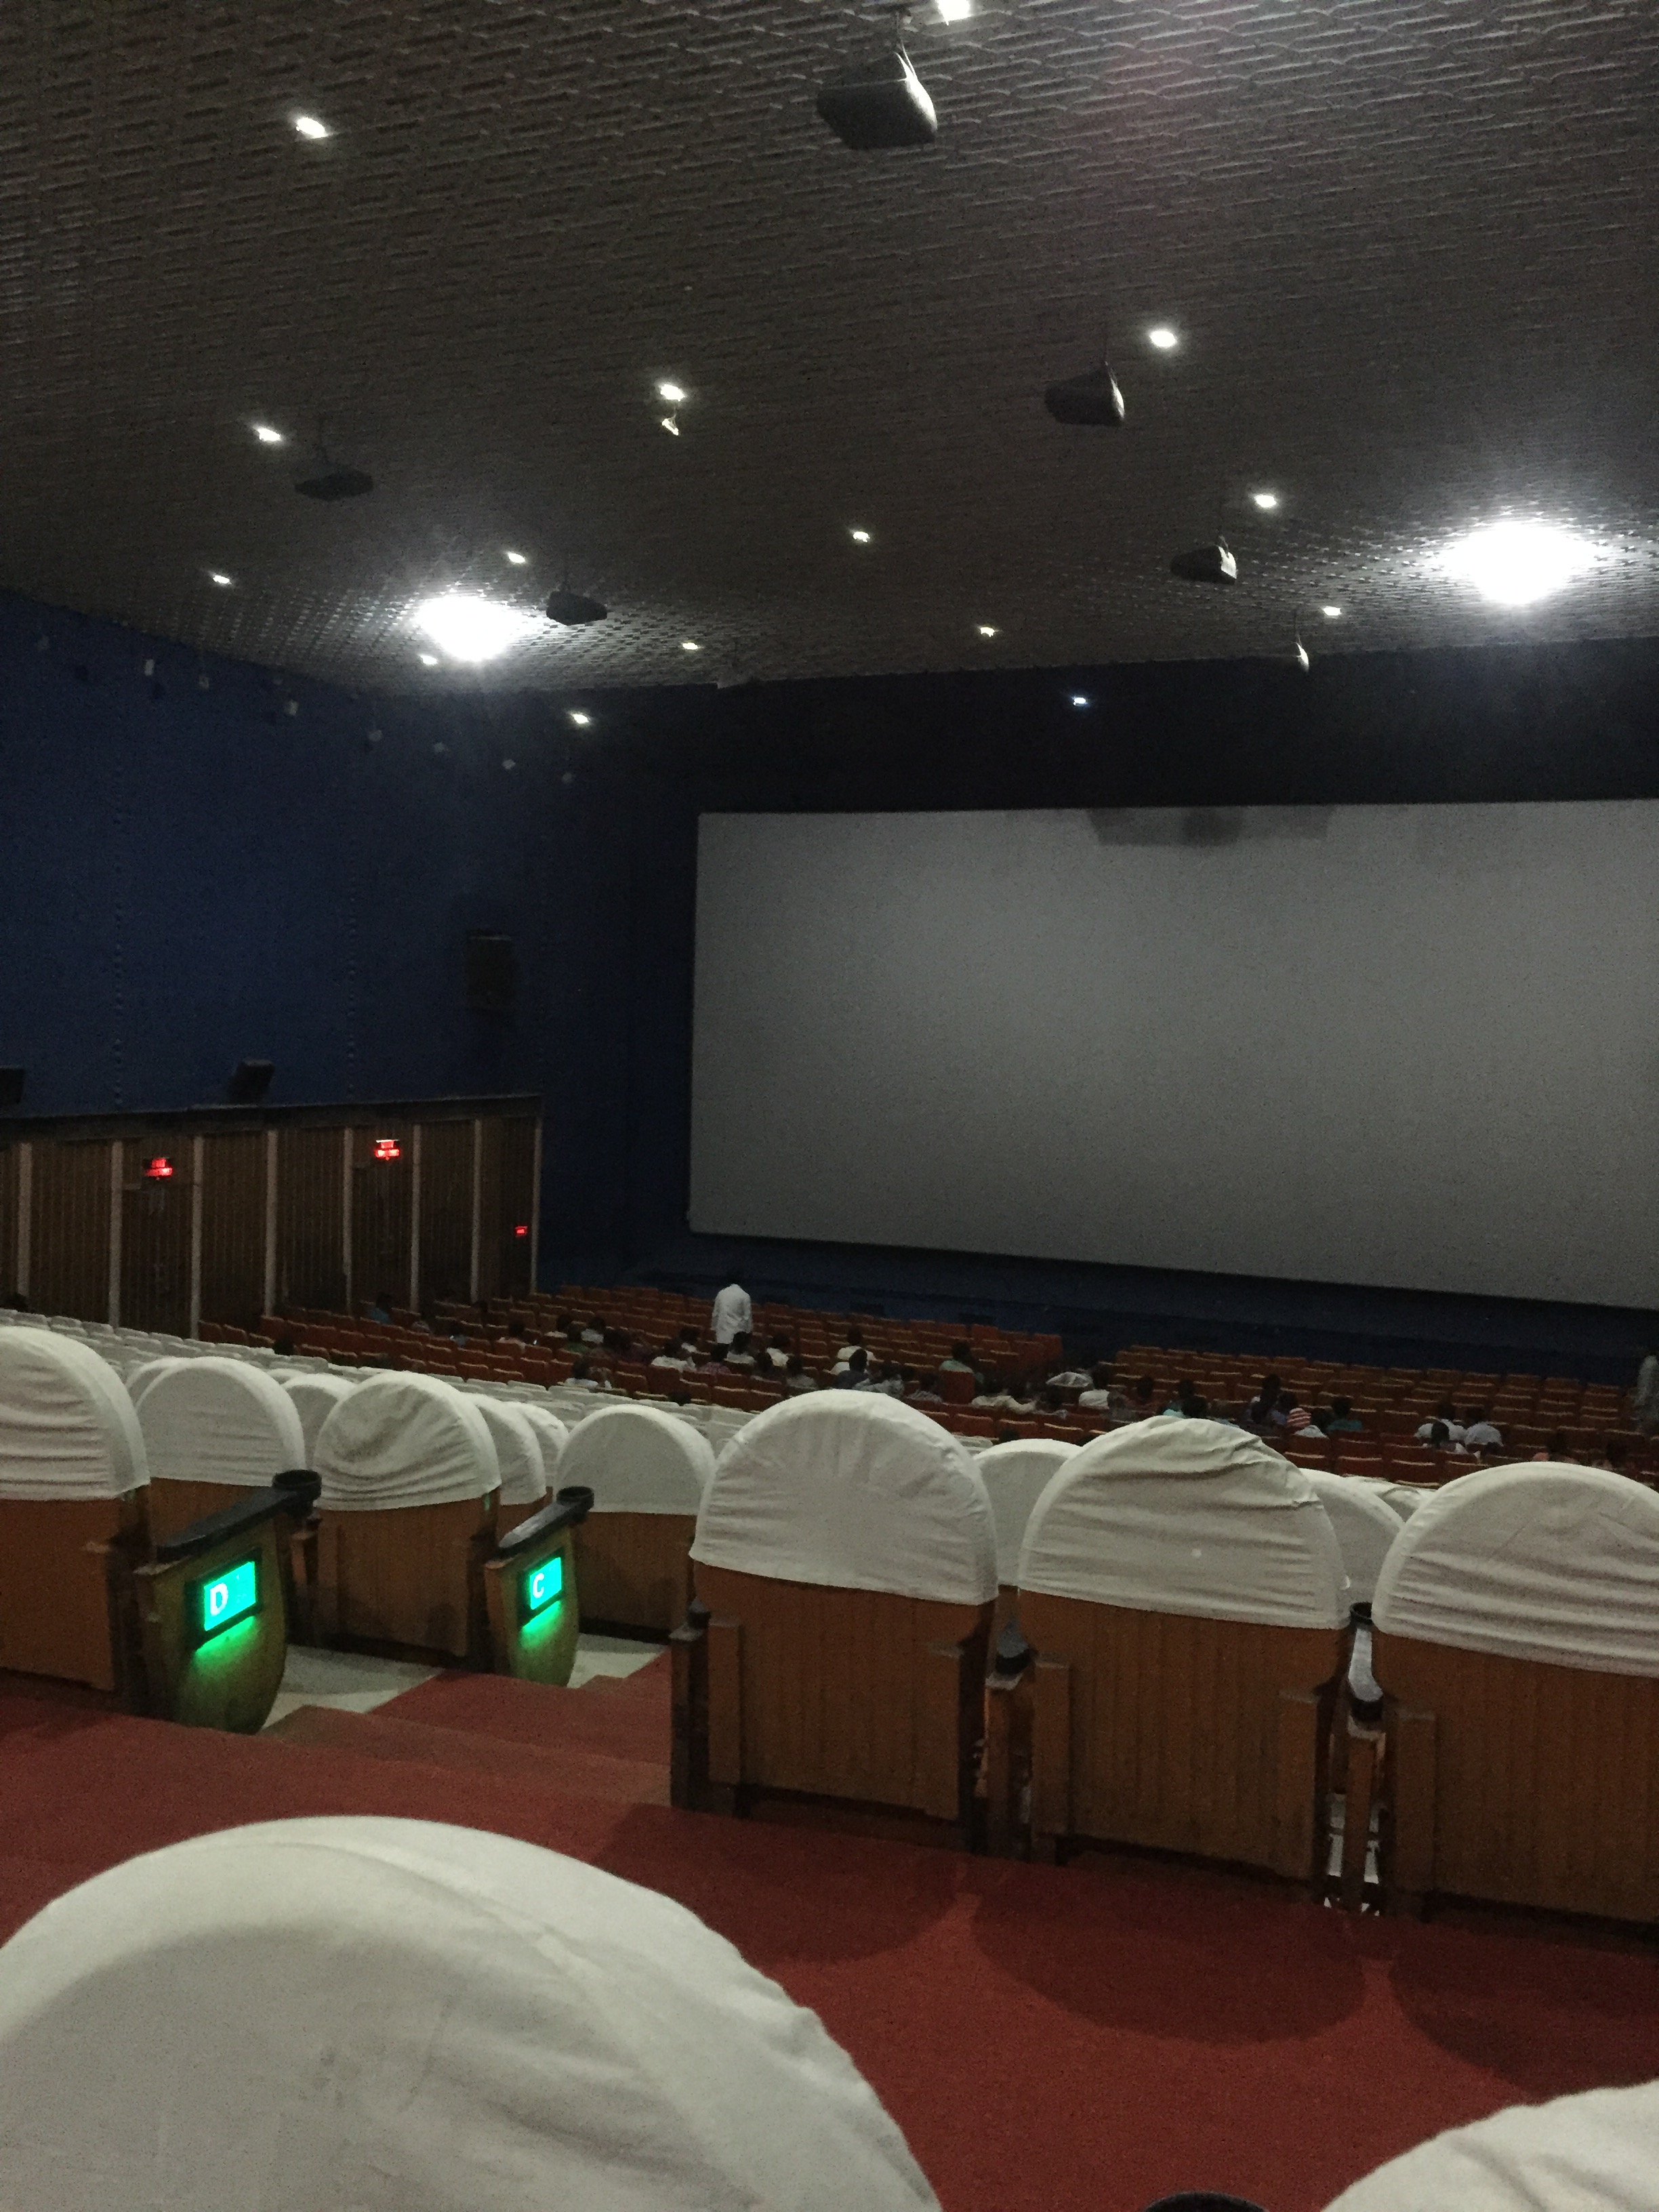 Gallery – My Cinema Theater